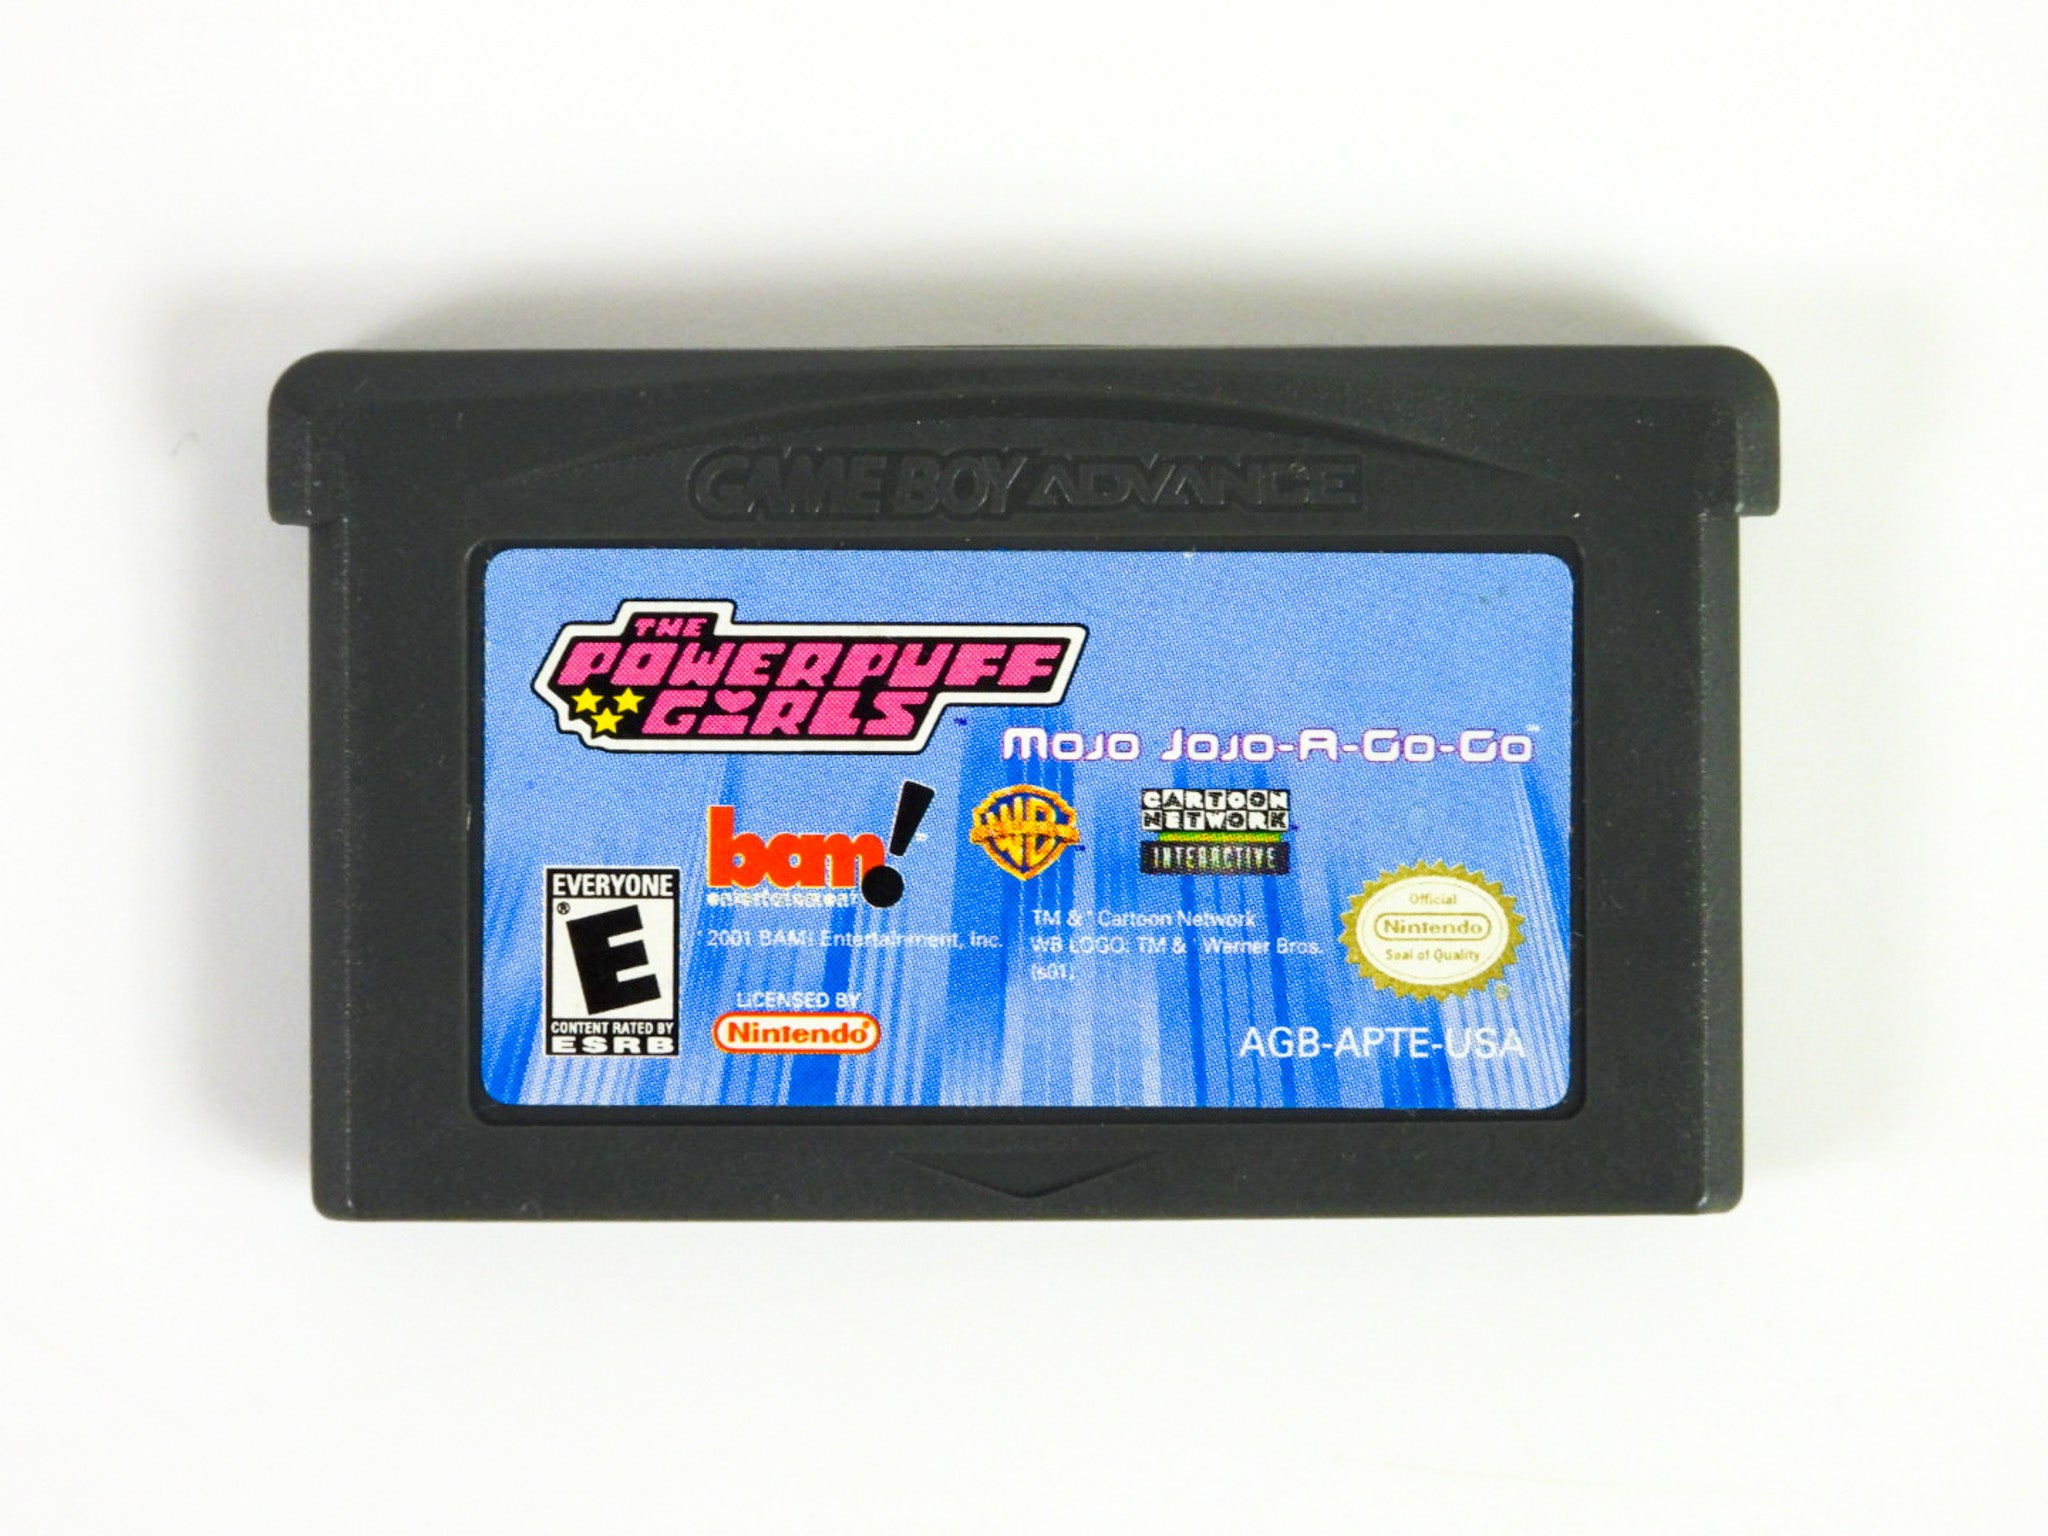 Powerpuff Girls Mojo Jojo-A-Gogo Used GBA Games For Sale